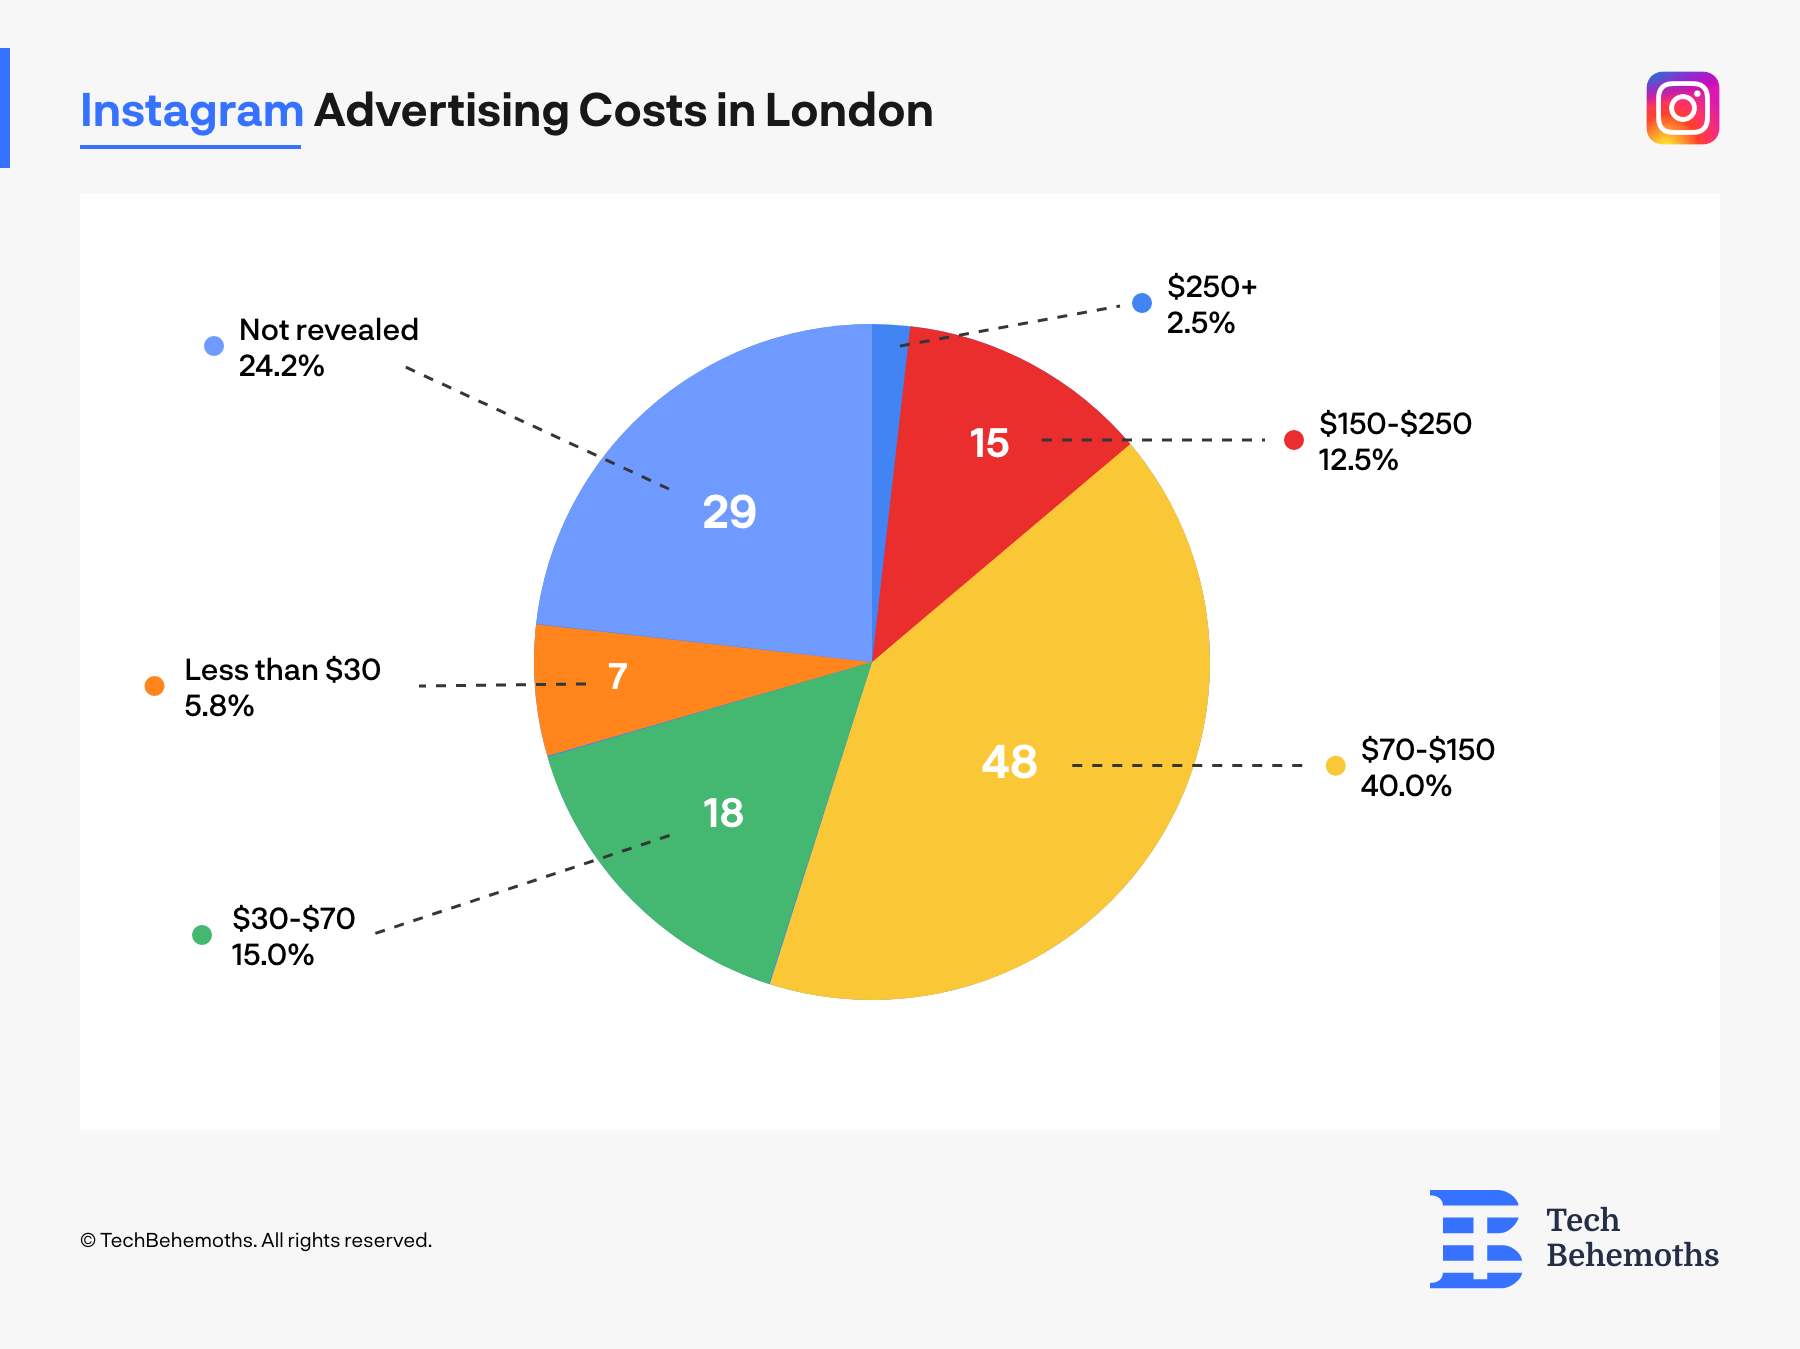 Instagram advertising costs in London, UK